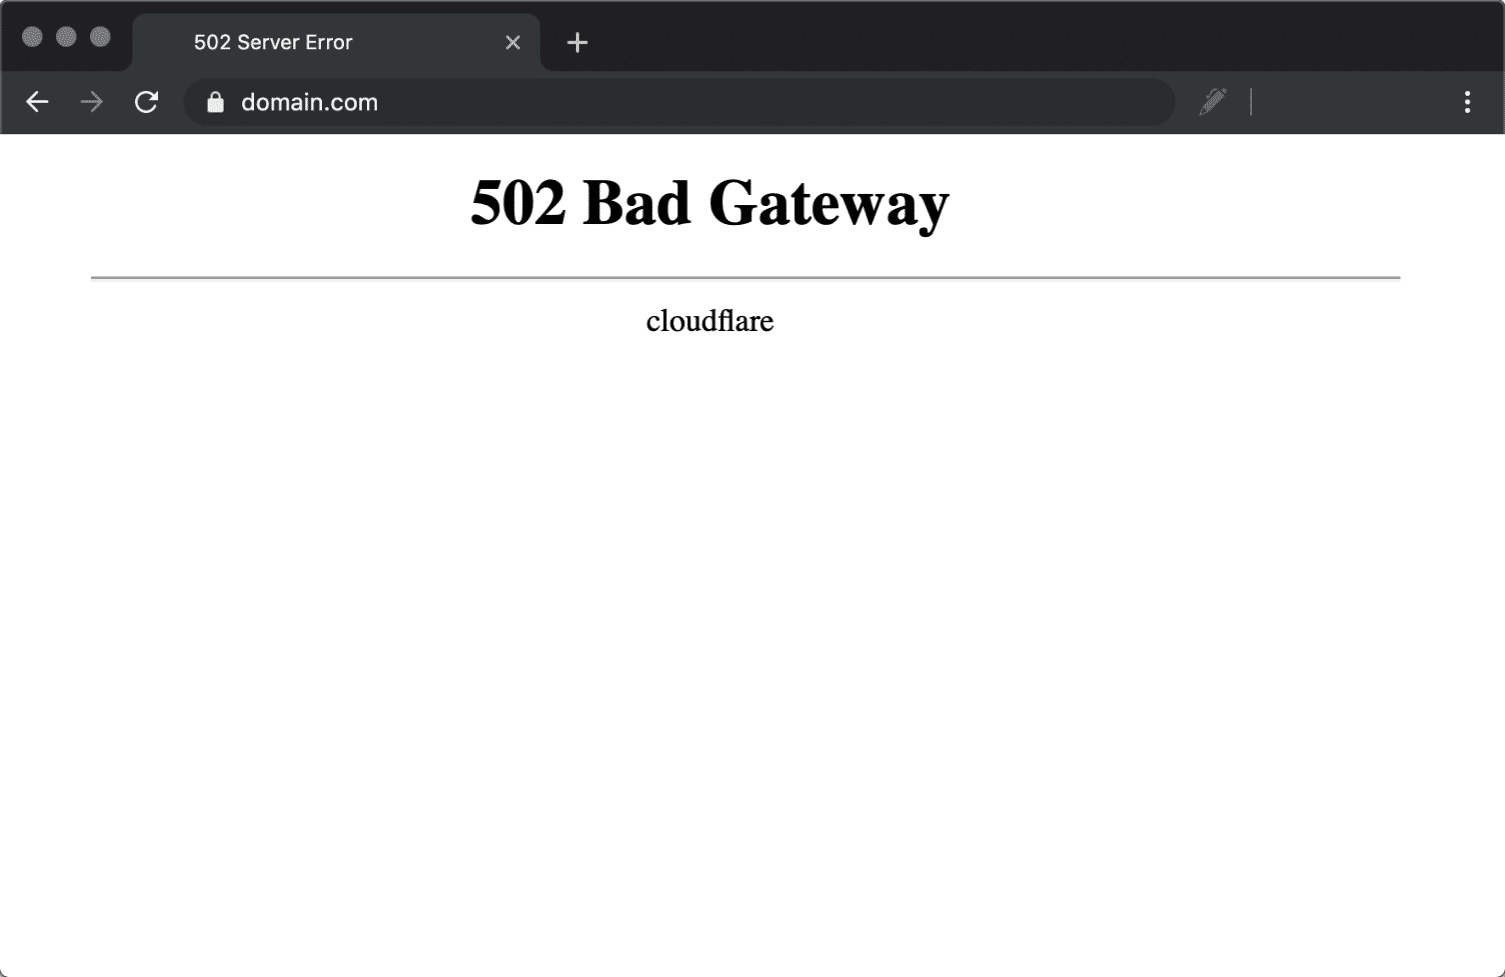 502-bad-gateway-cloudflare-error